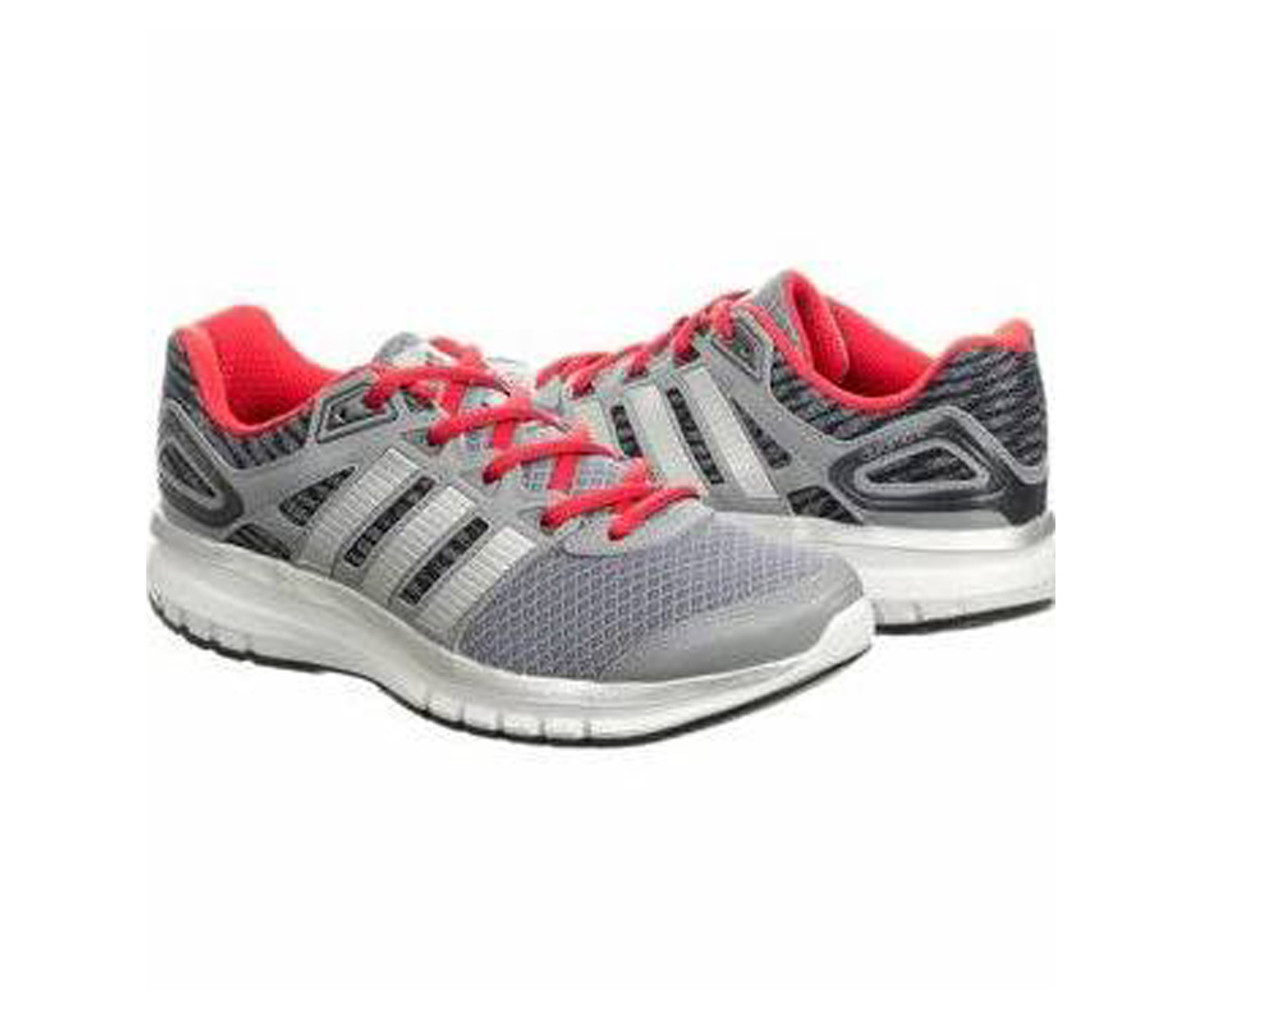 Adidas Men's Duramo 6 Running Shoes Grey | Discount Adidas Men's Athletic More - Shoolu.com | Shoolu.com